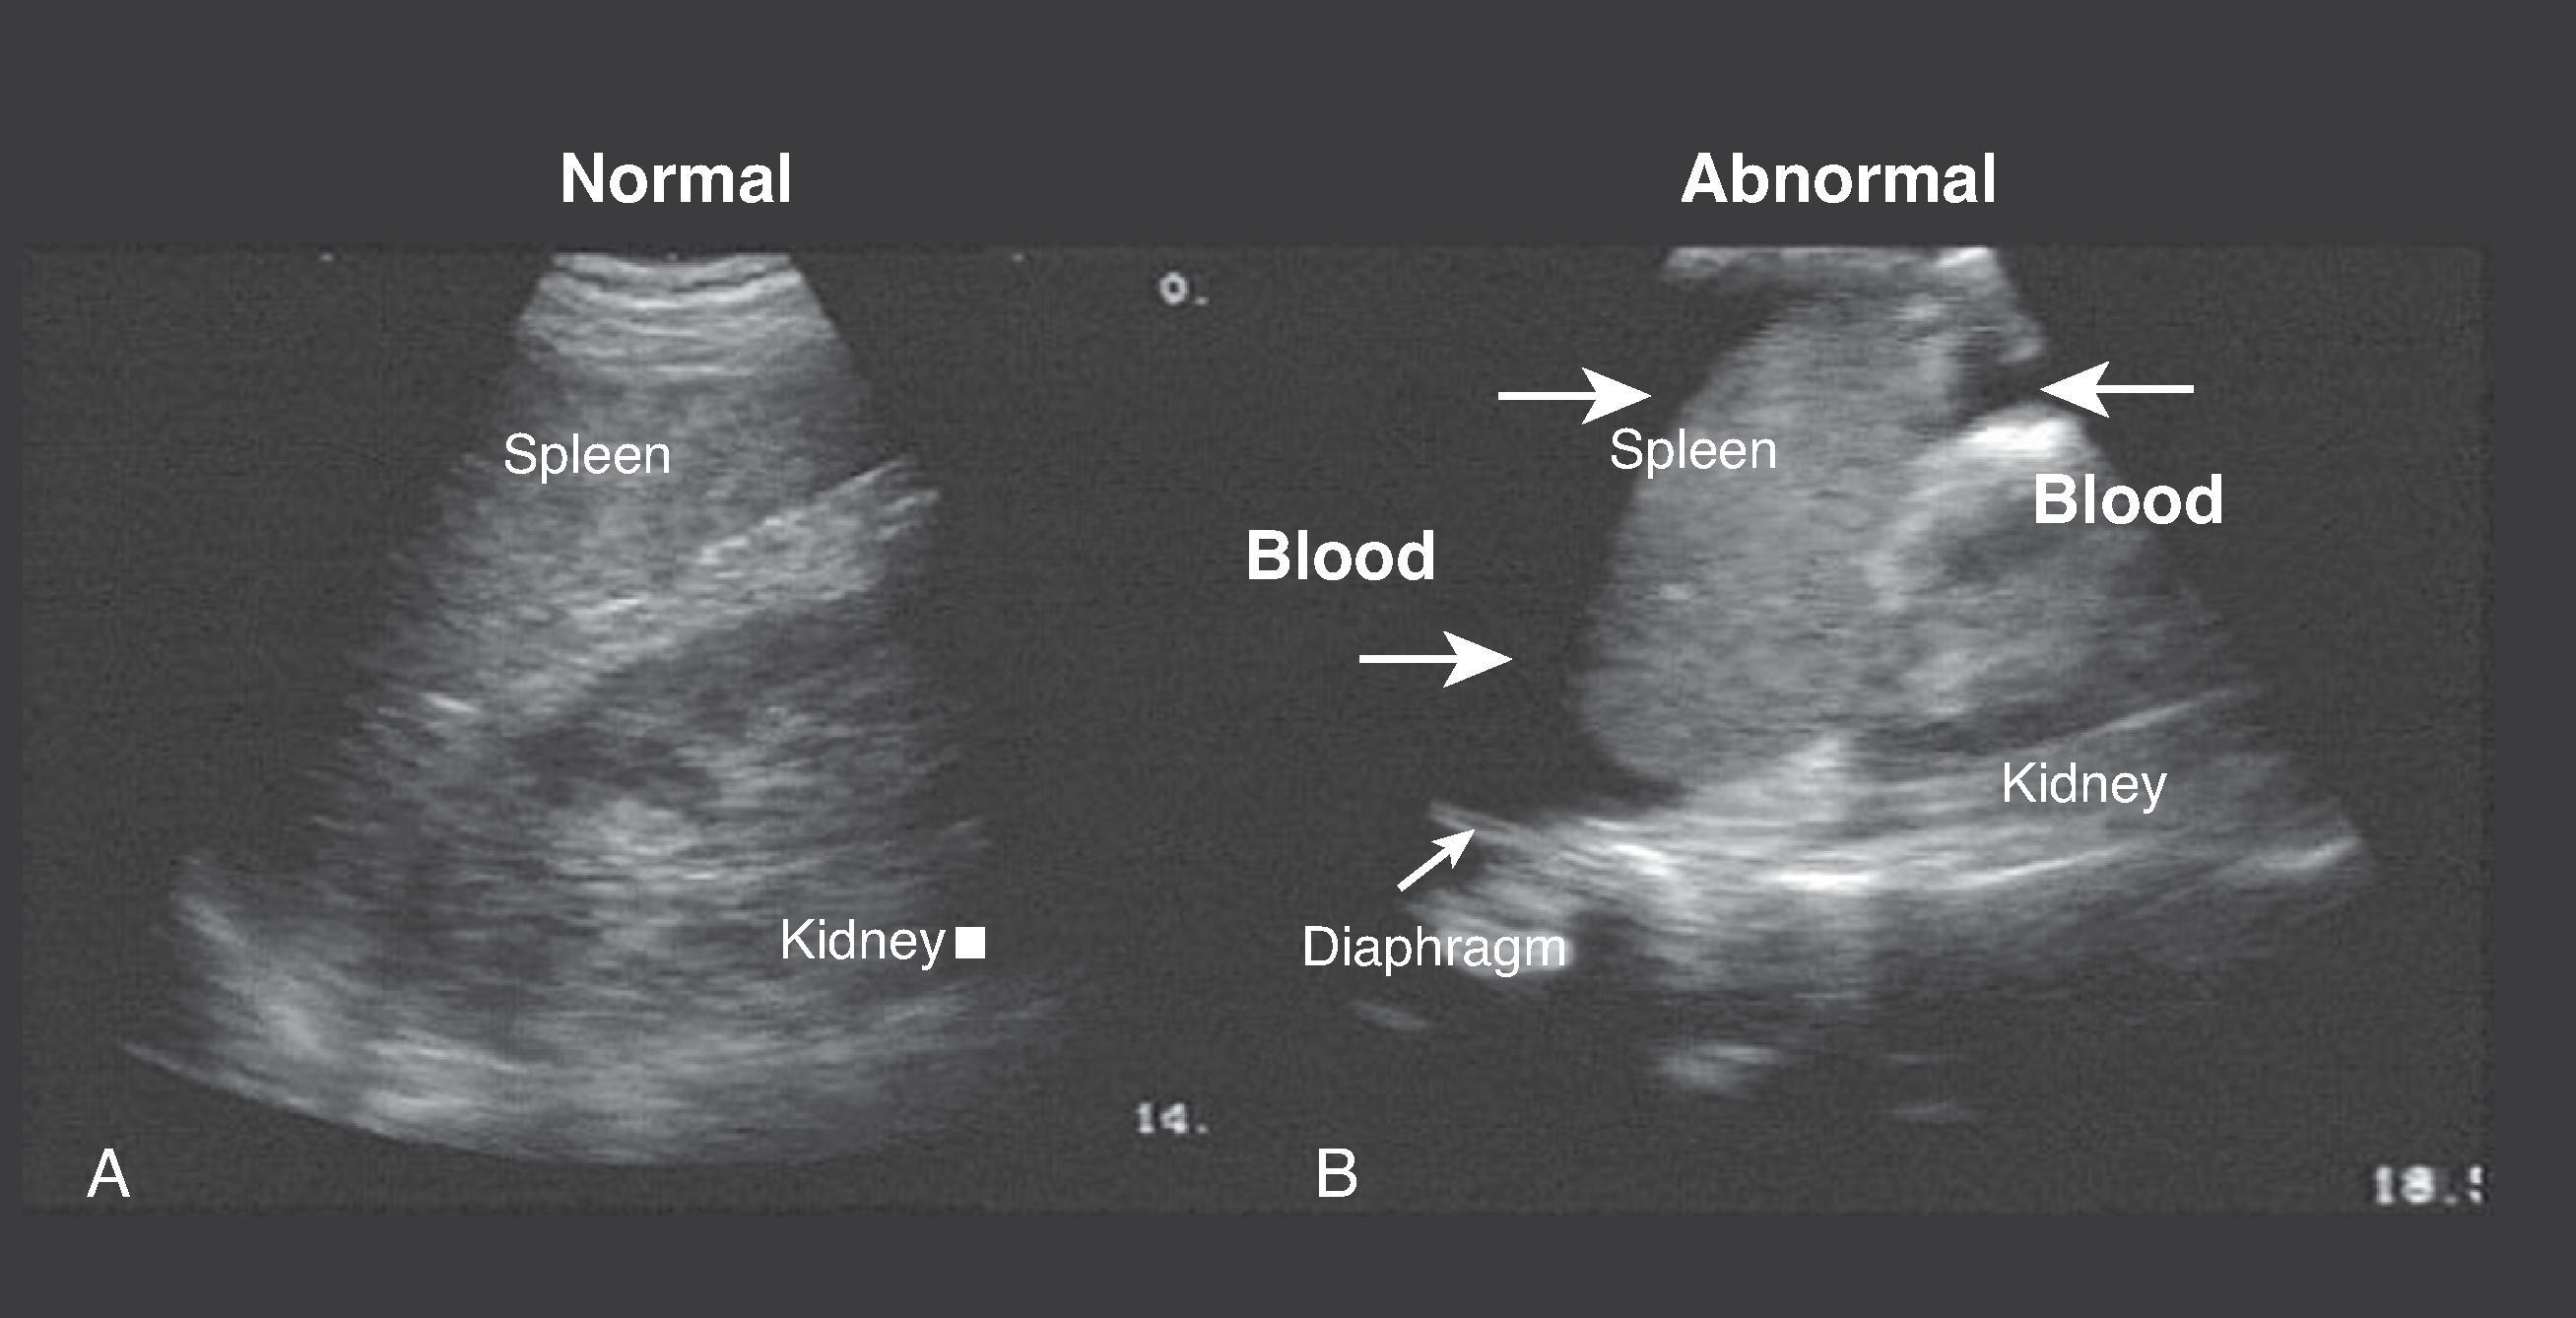 FIG. 4, (A) Normal sagittal view of spleen, kidney, and diaphragm. (B) Abnormal sagittal view of spleen, kidney, and diaphragm with fluid (blood) between spleen and kidney and above the spleen in the subphrenic space (arrows).